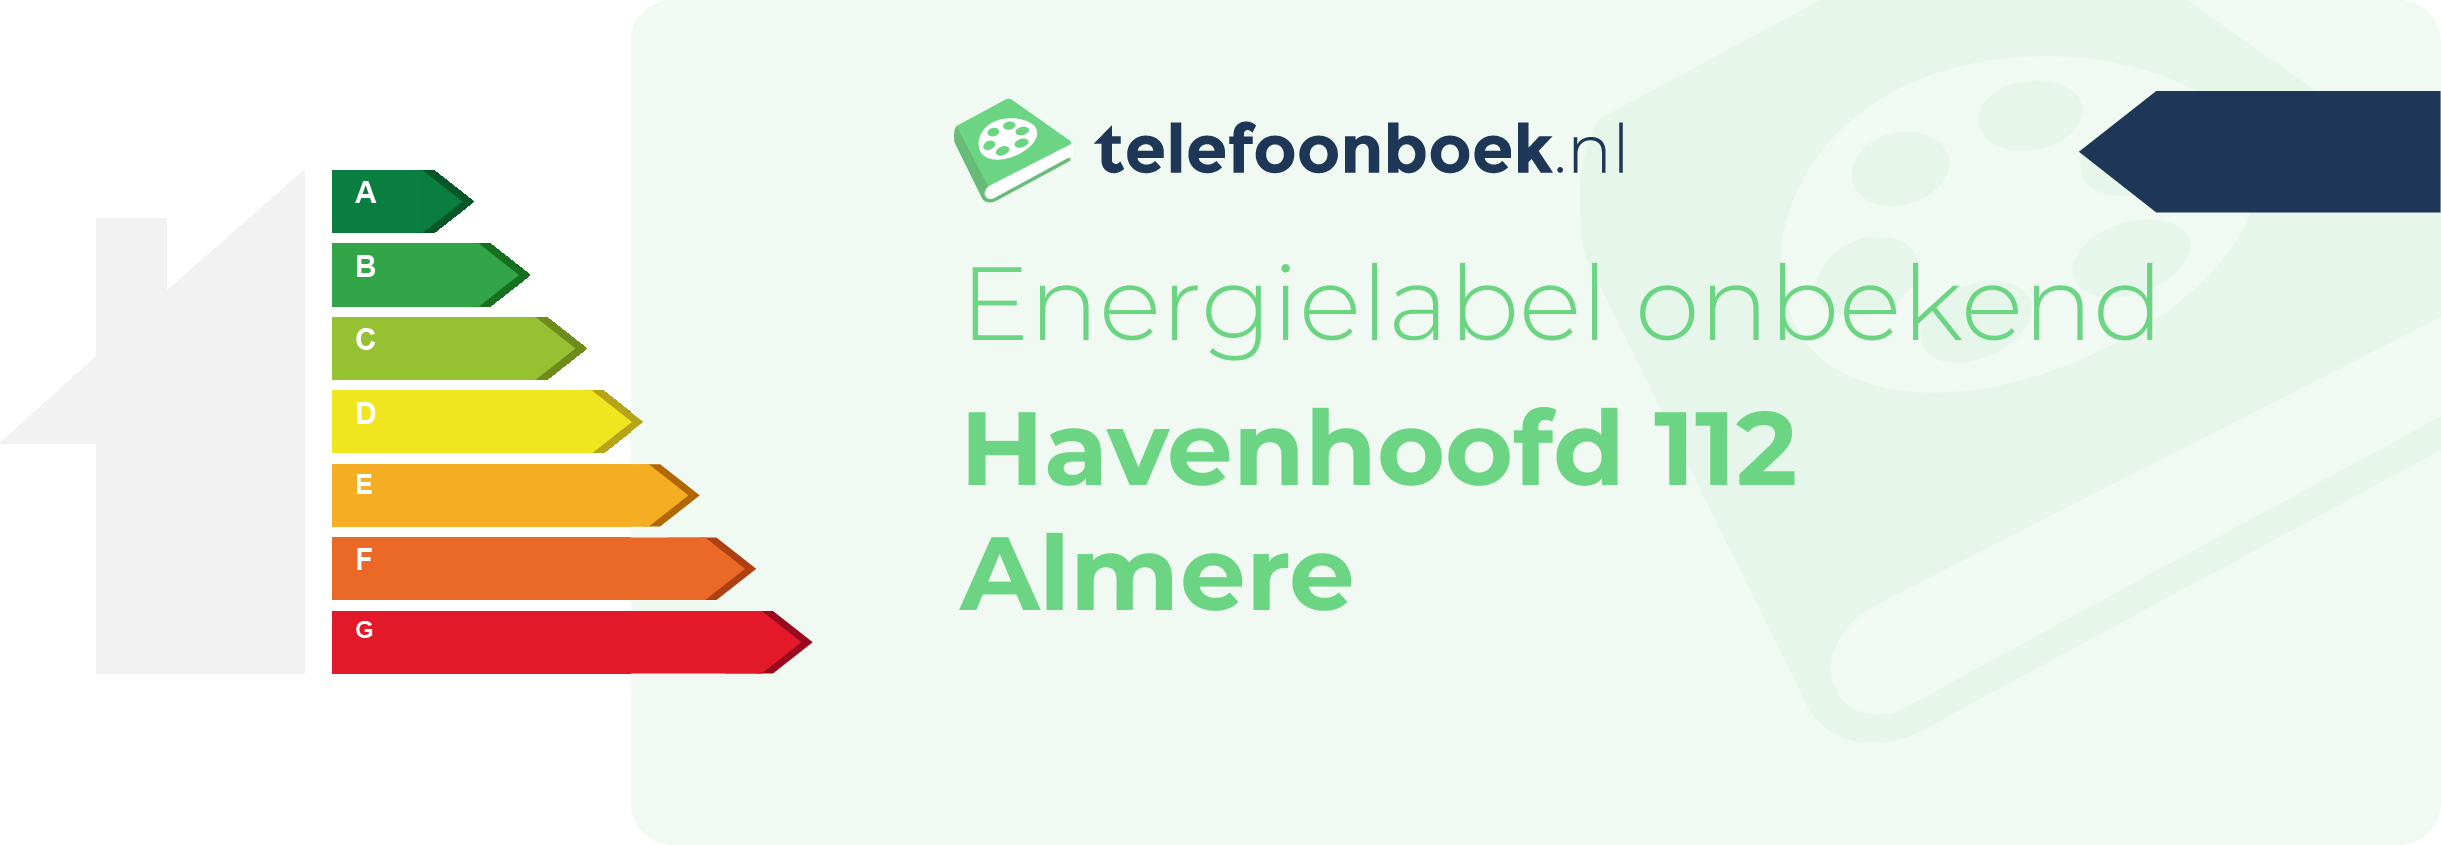 Energielabel Havenhoofd 112 Almere